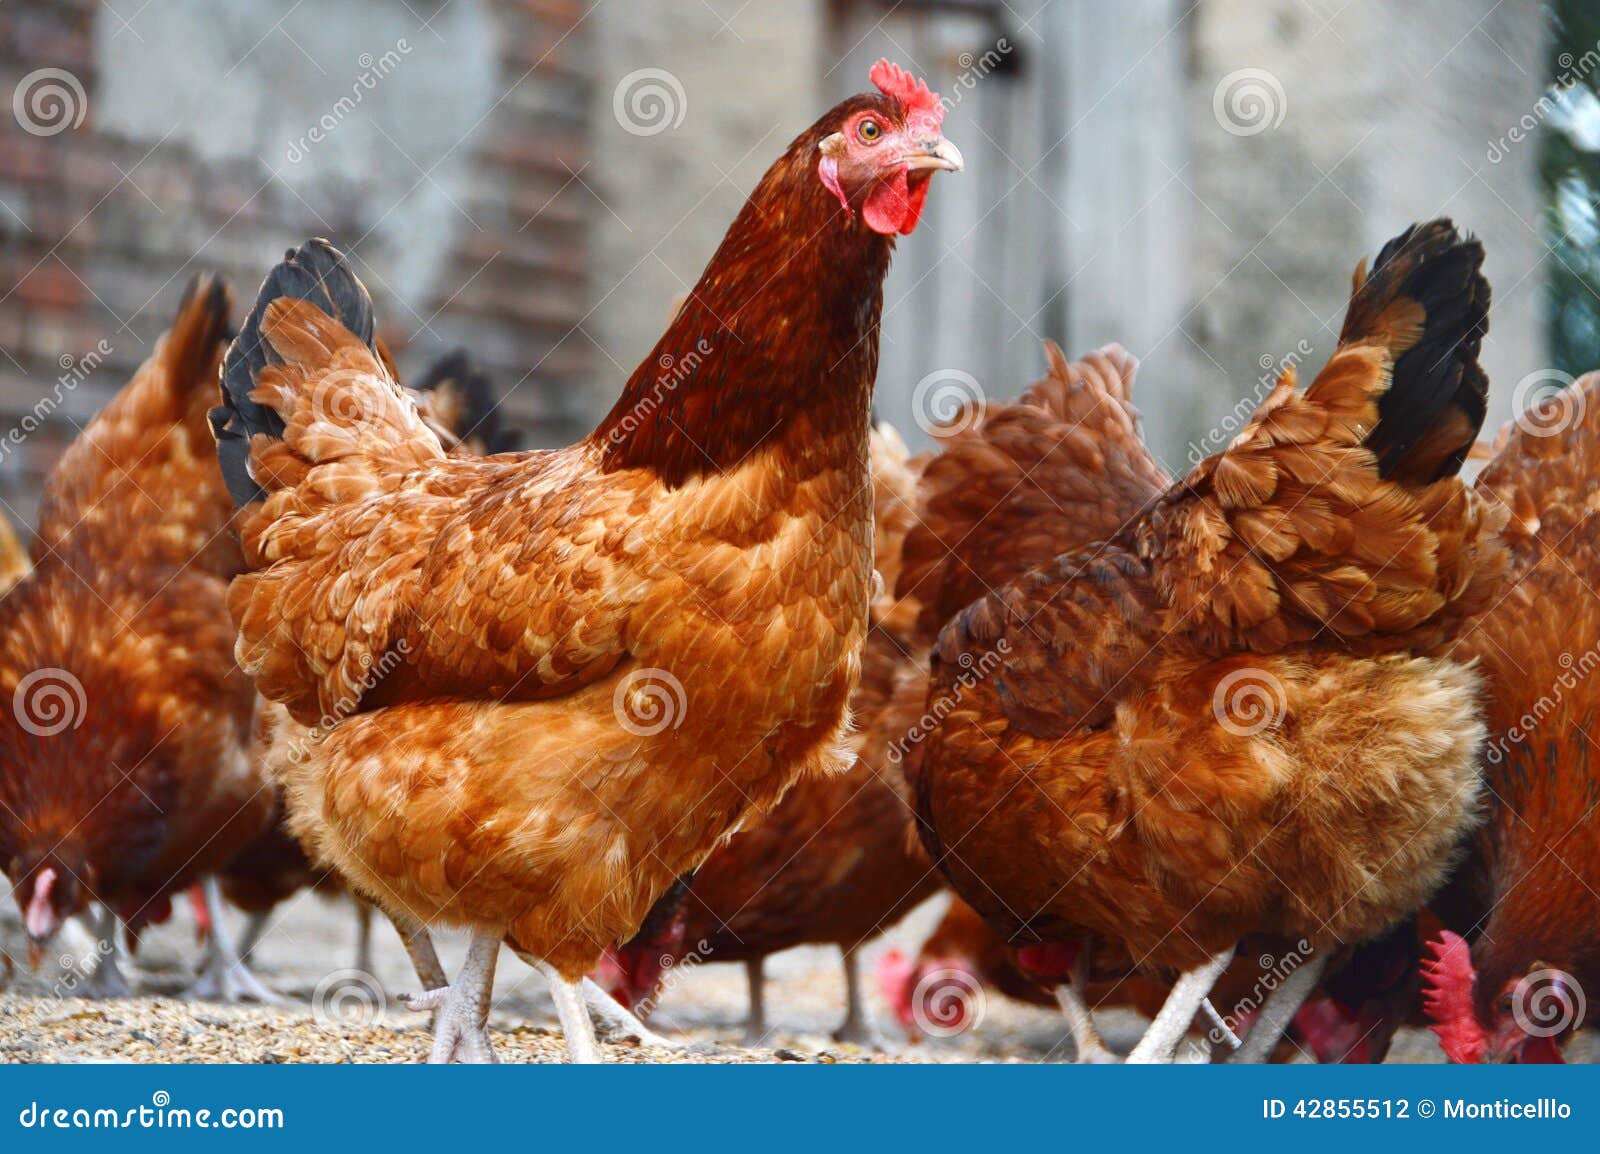 2,721 Chickens Farm House Free Range Stock Photos - Free & Royalty-Free  Stock Photos from Dreamstime